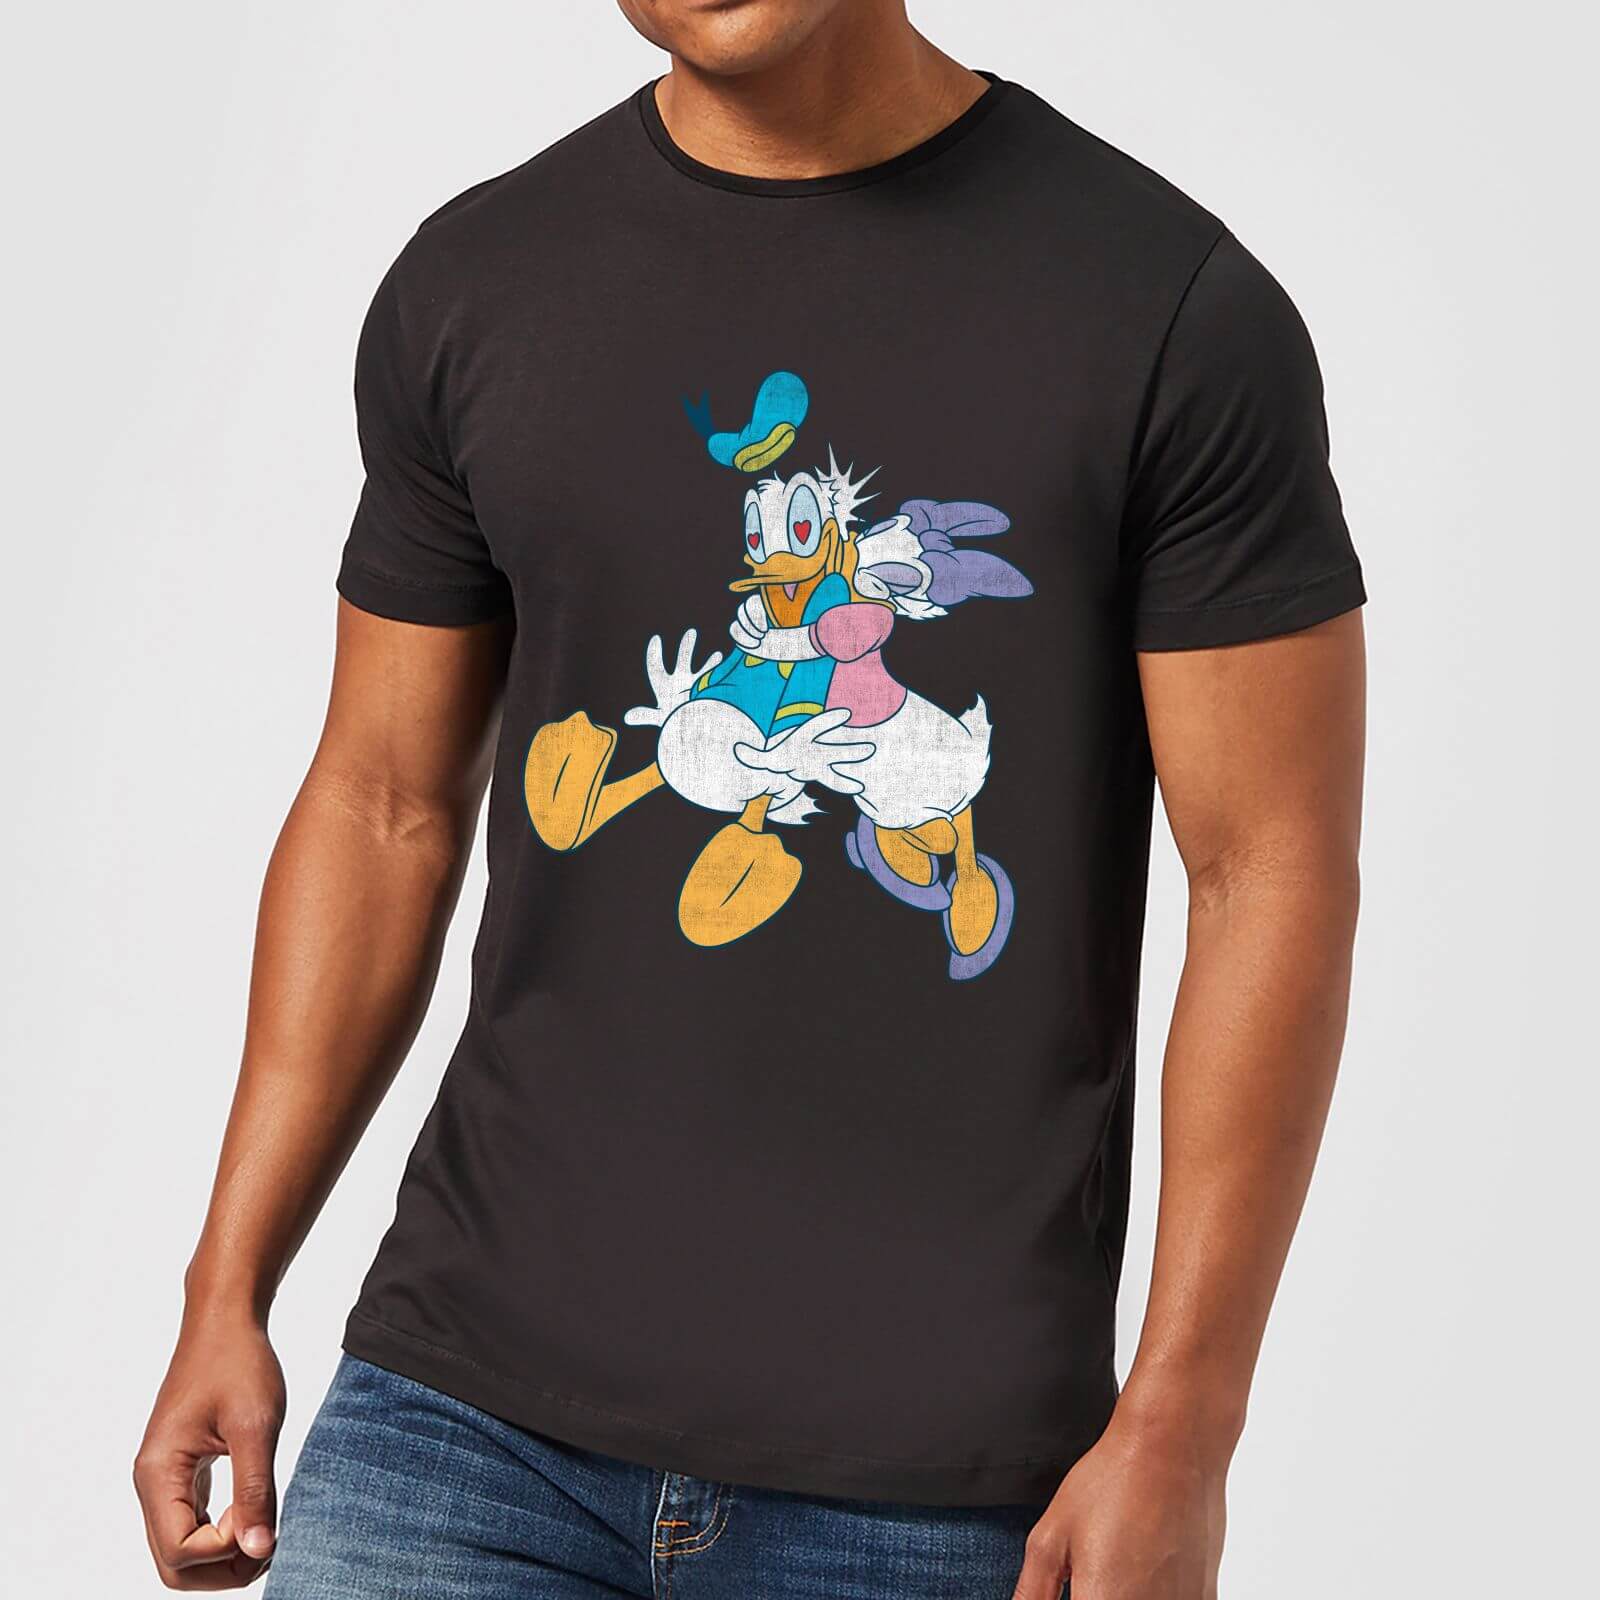 Disney Donald Daisy Kiss T-Shirt - Black - XL